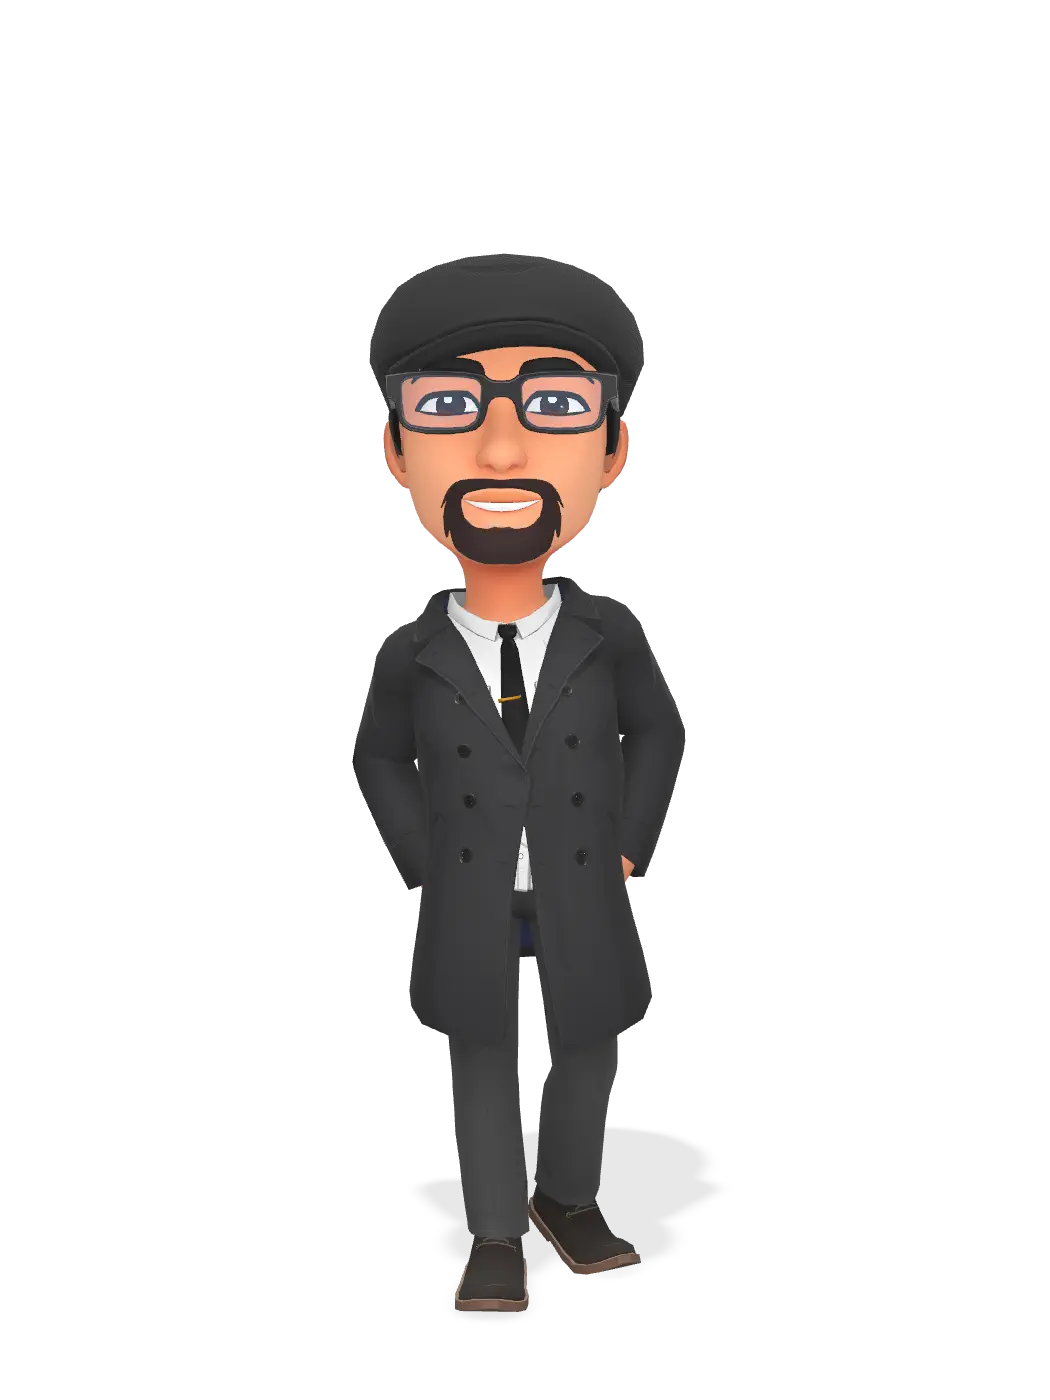 3D Bitmoji for vanlu-12 avatar